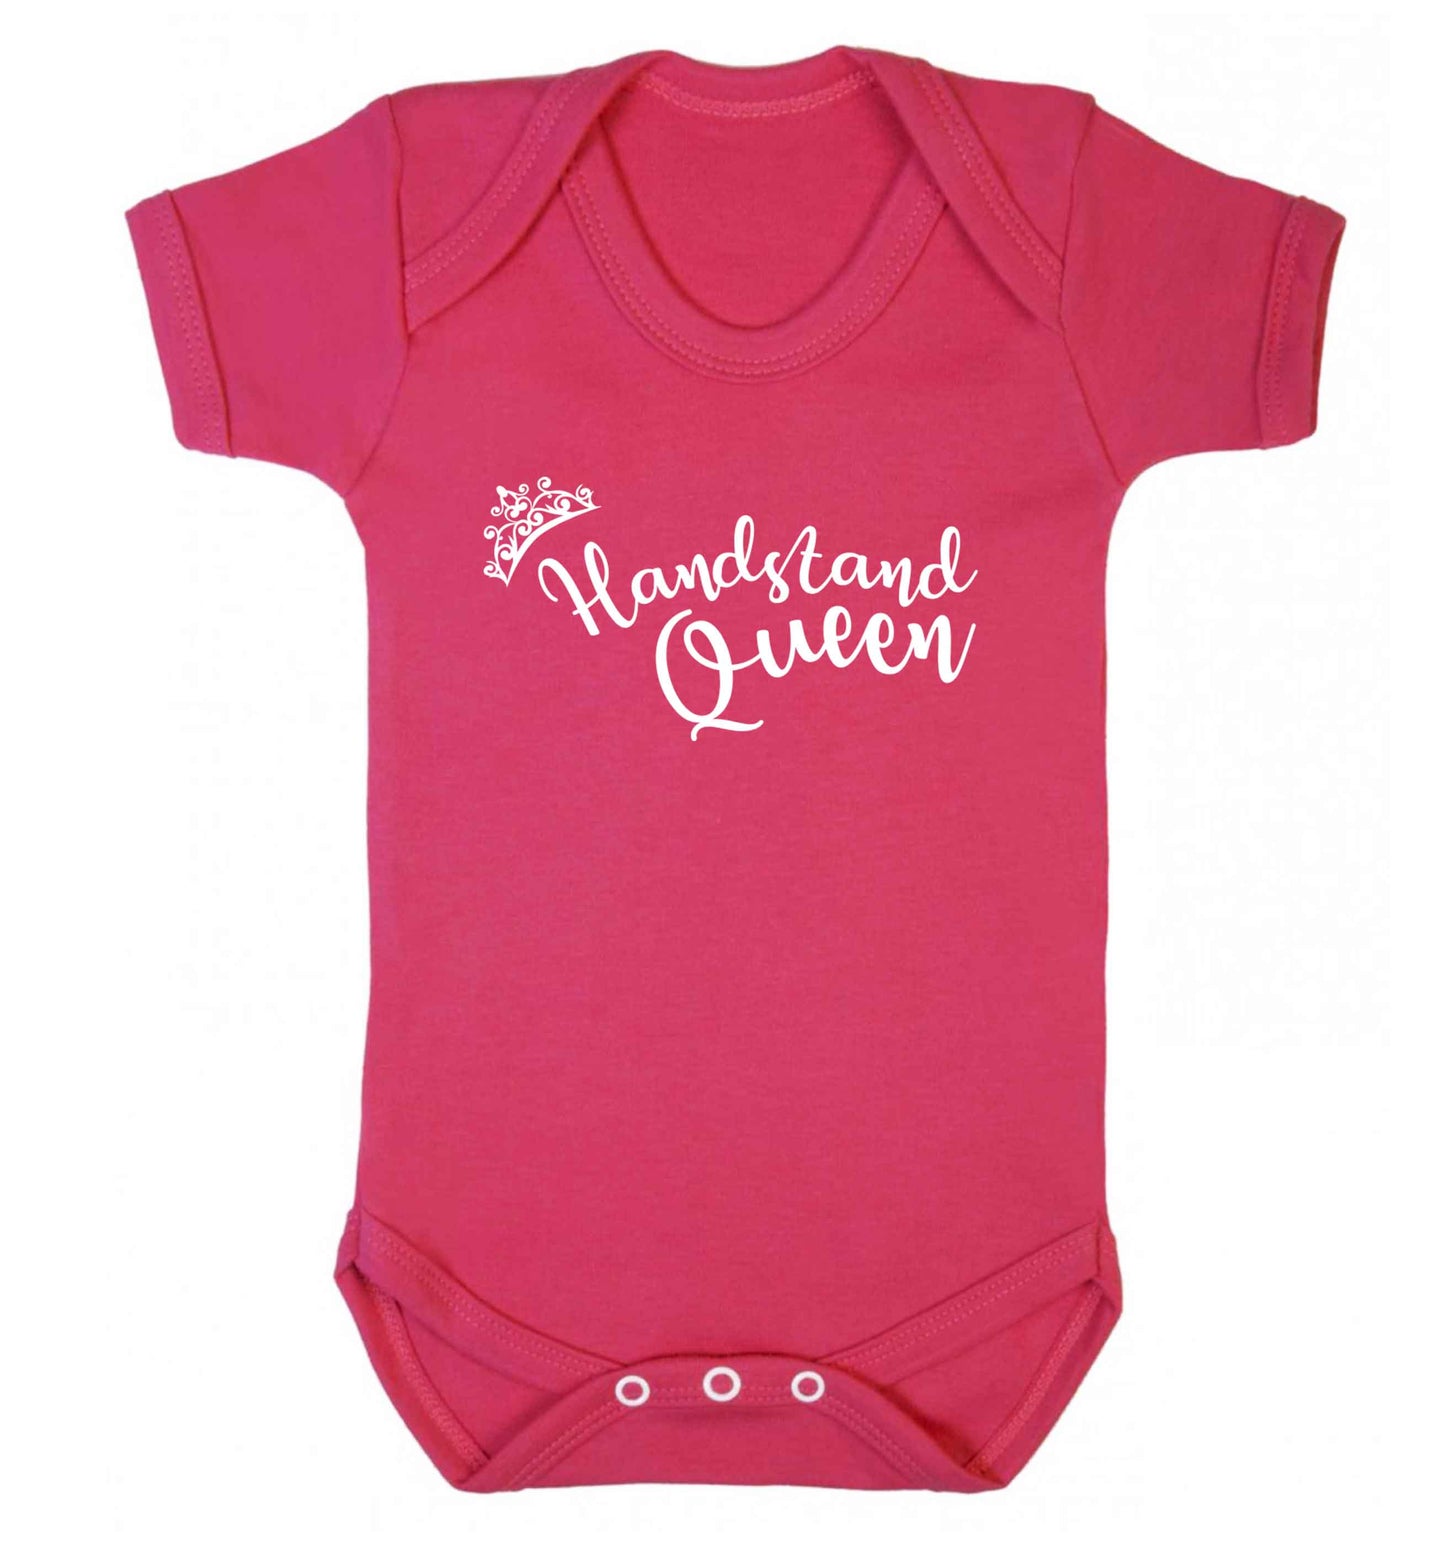 Handstand Queen Baby Vest dark pink 18-24 months